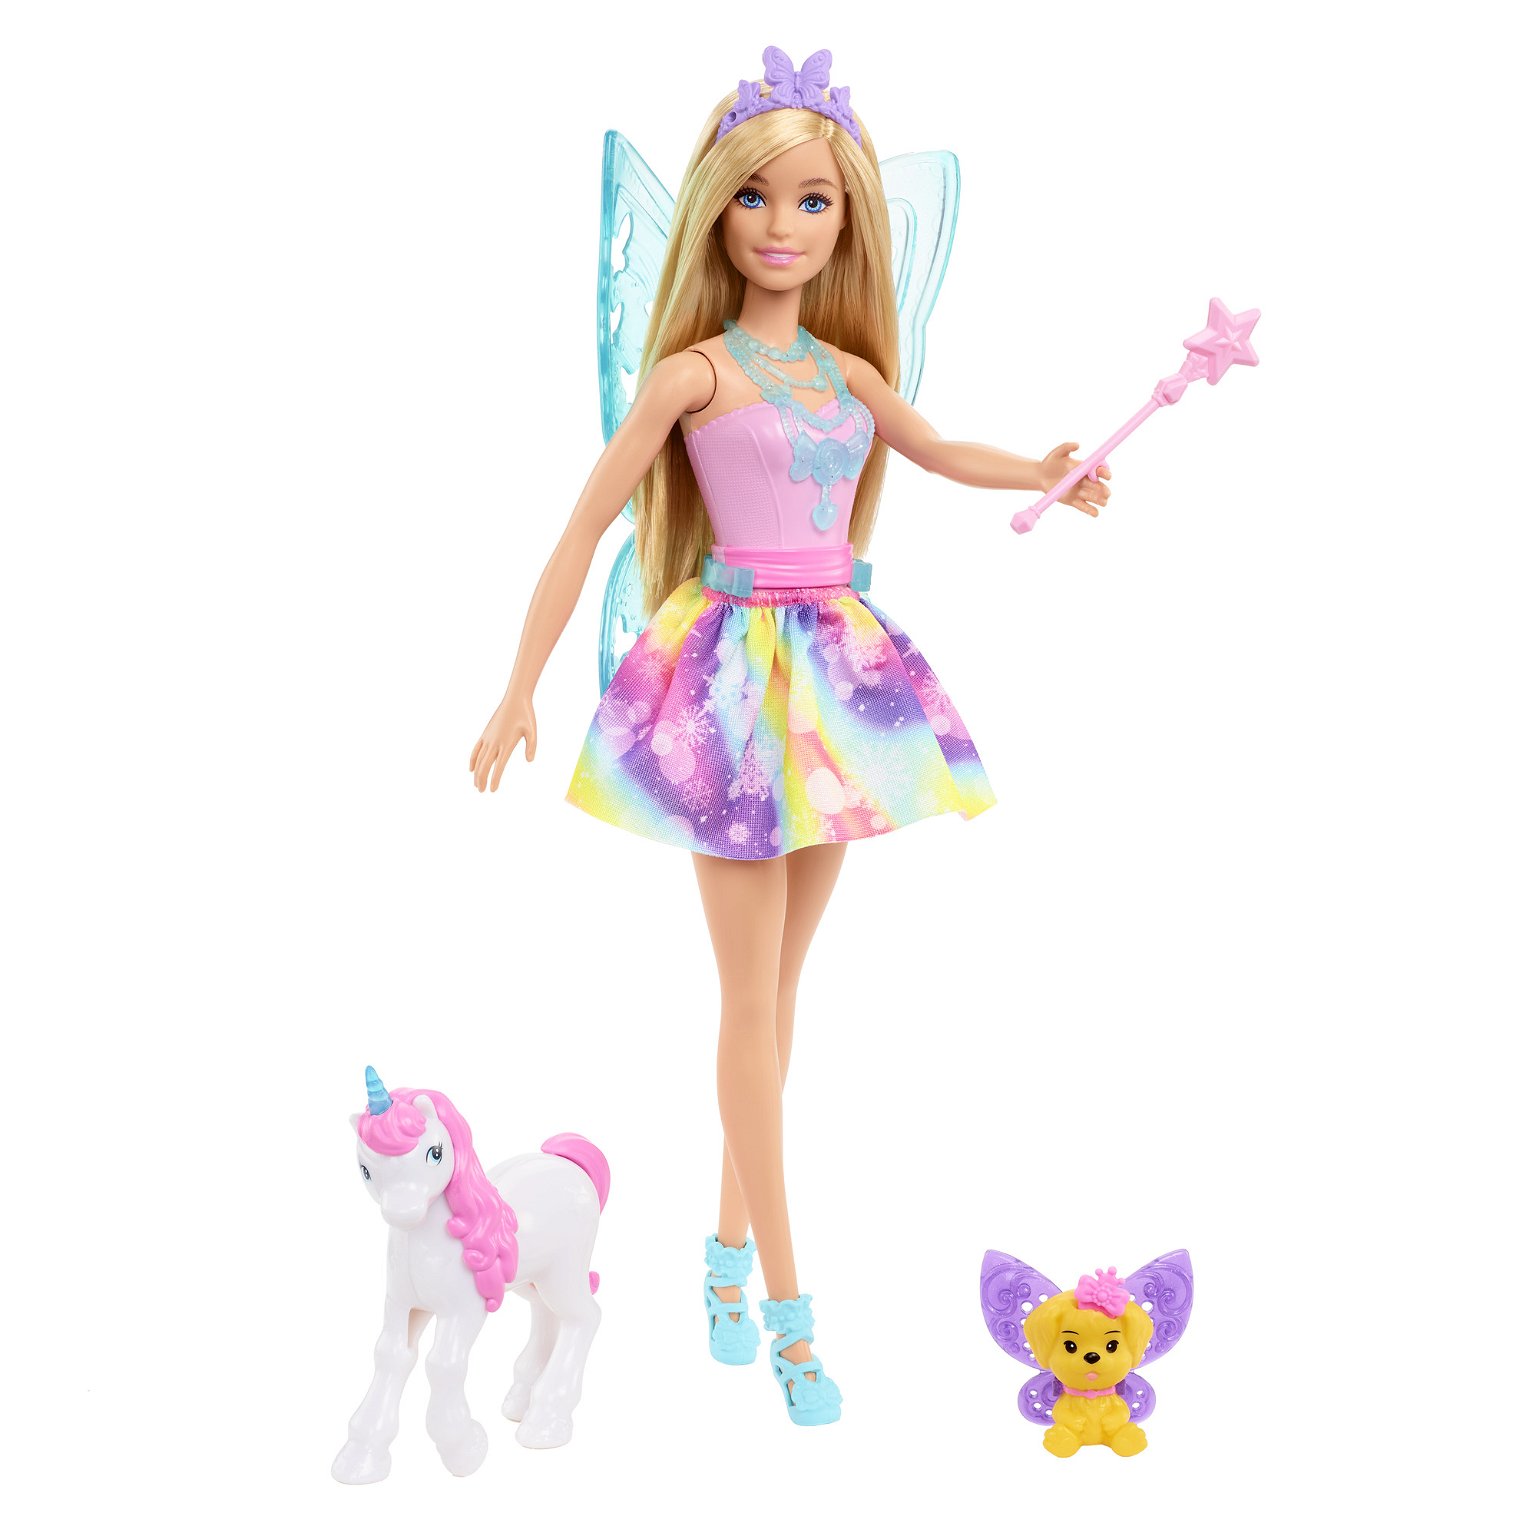 Barbie Dreamtopia advento kalendorius - 6